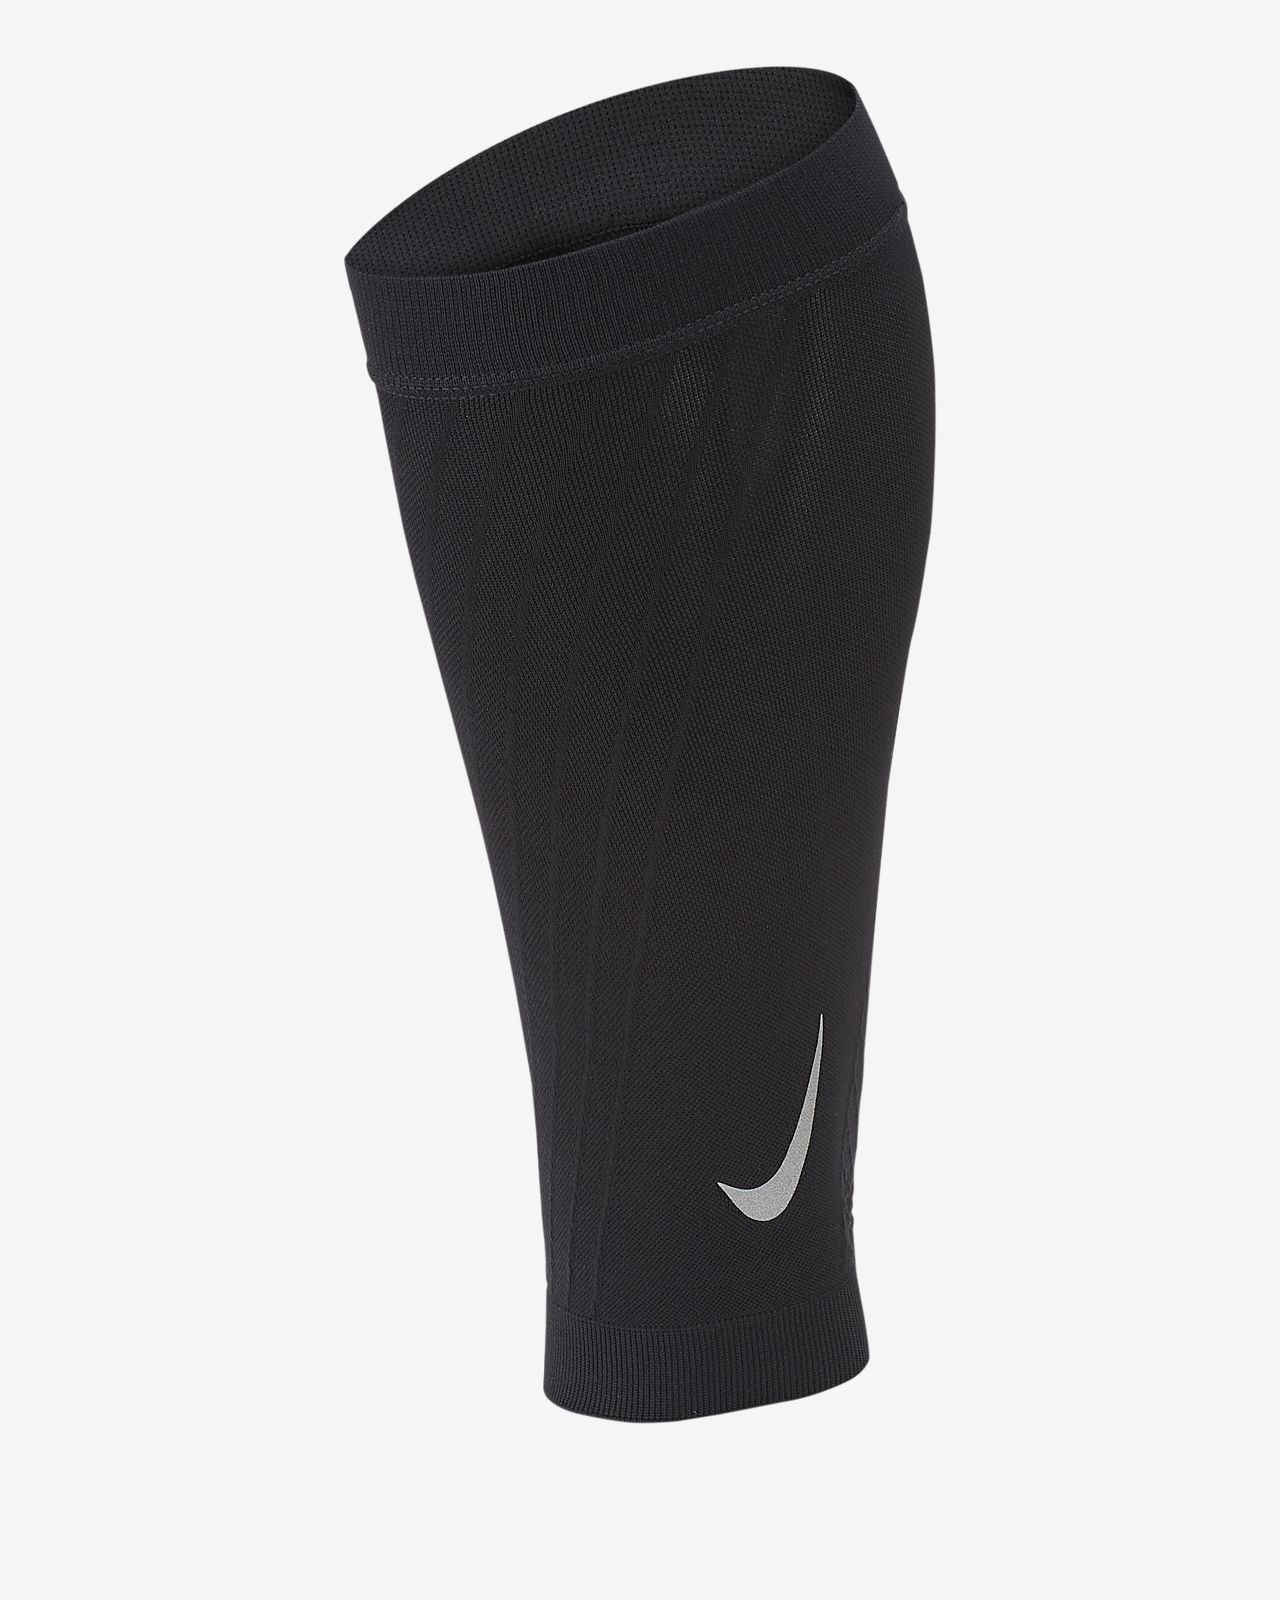 Nike Knee Sleeve Size Chart